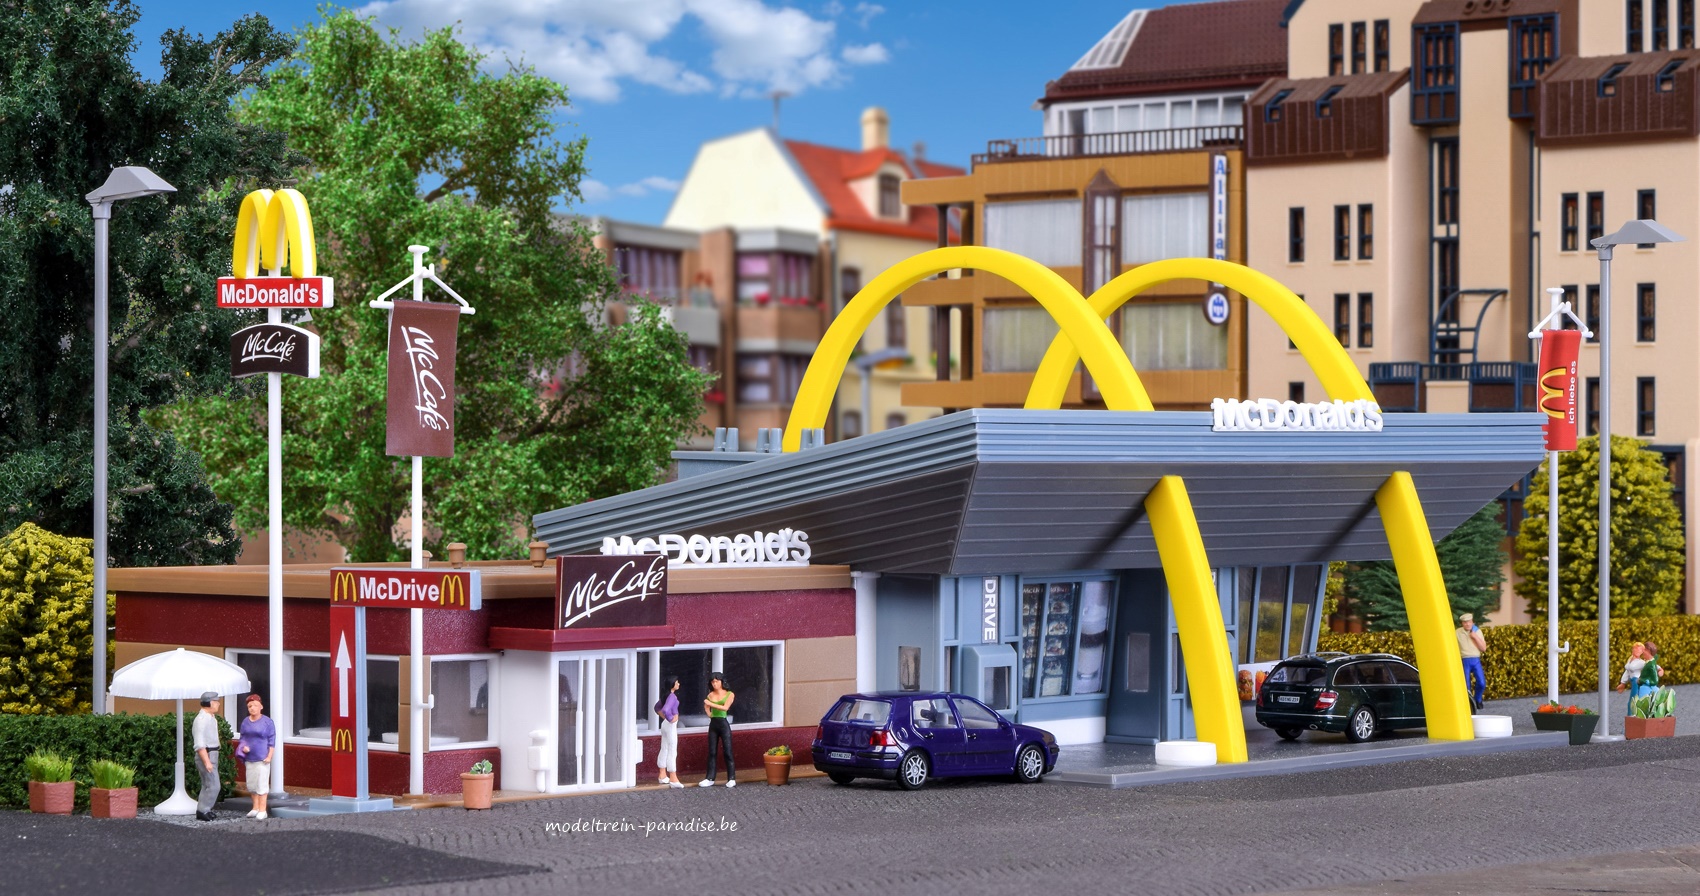 43635 ... McDonald's Restaurant mit McCafe